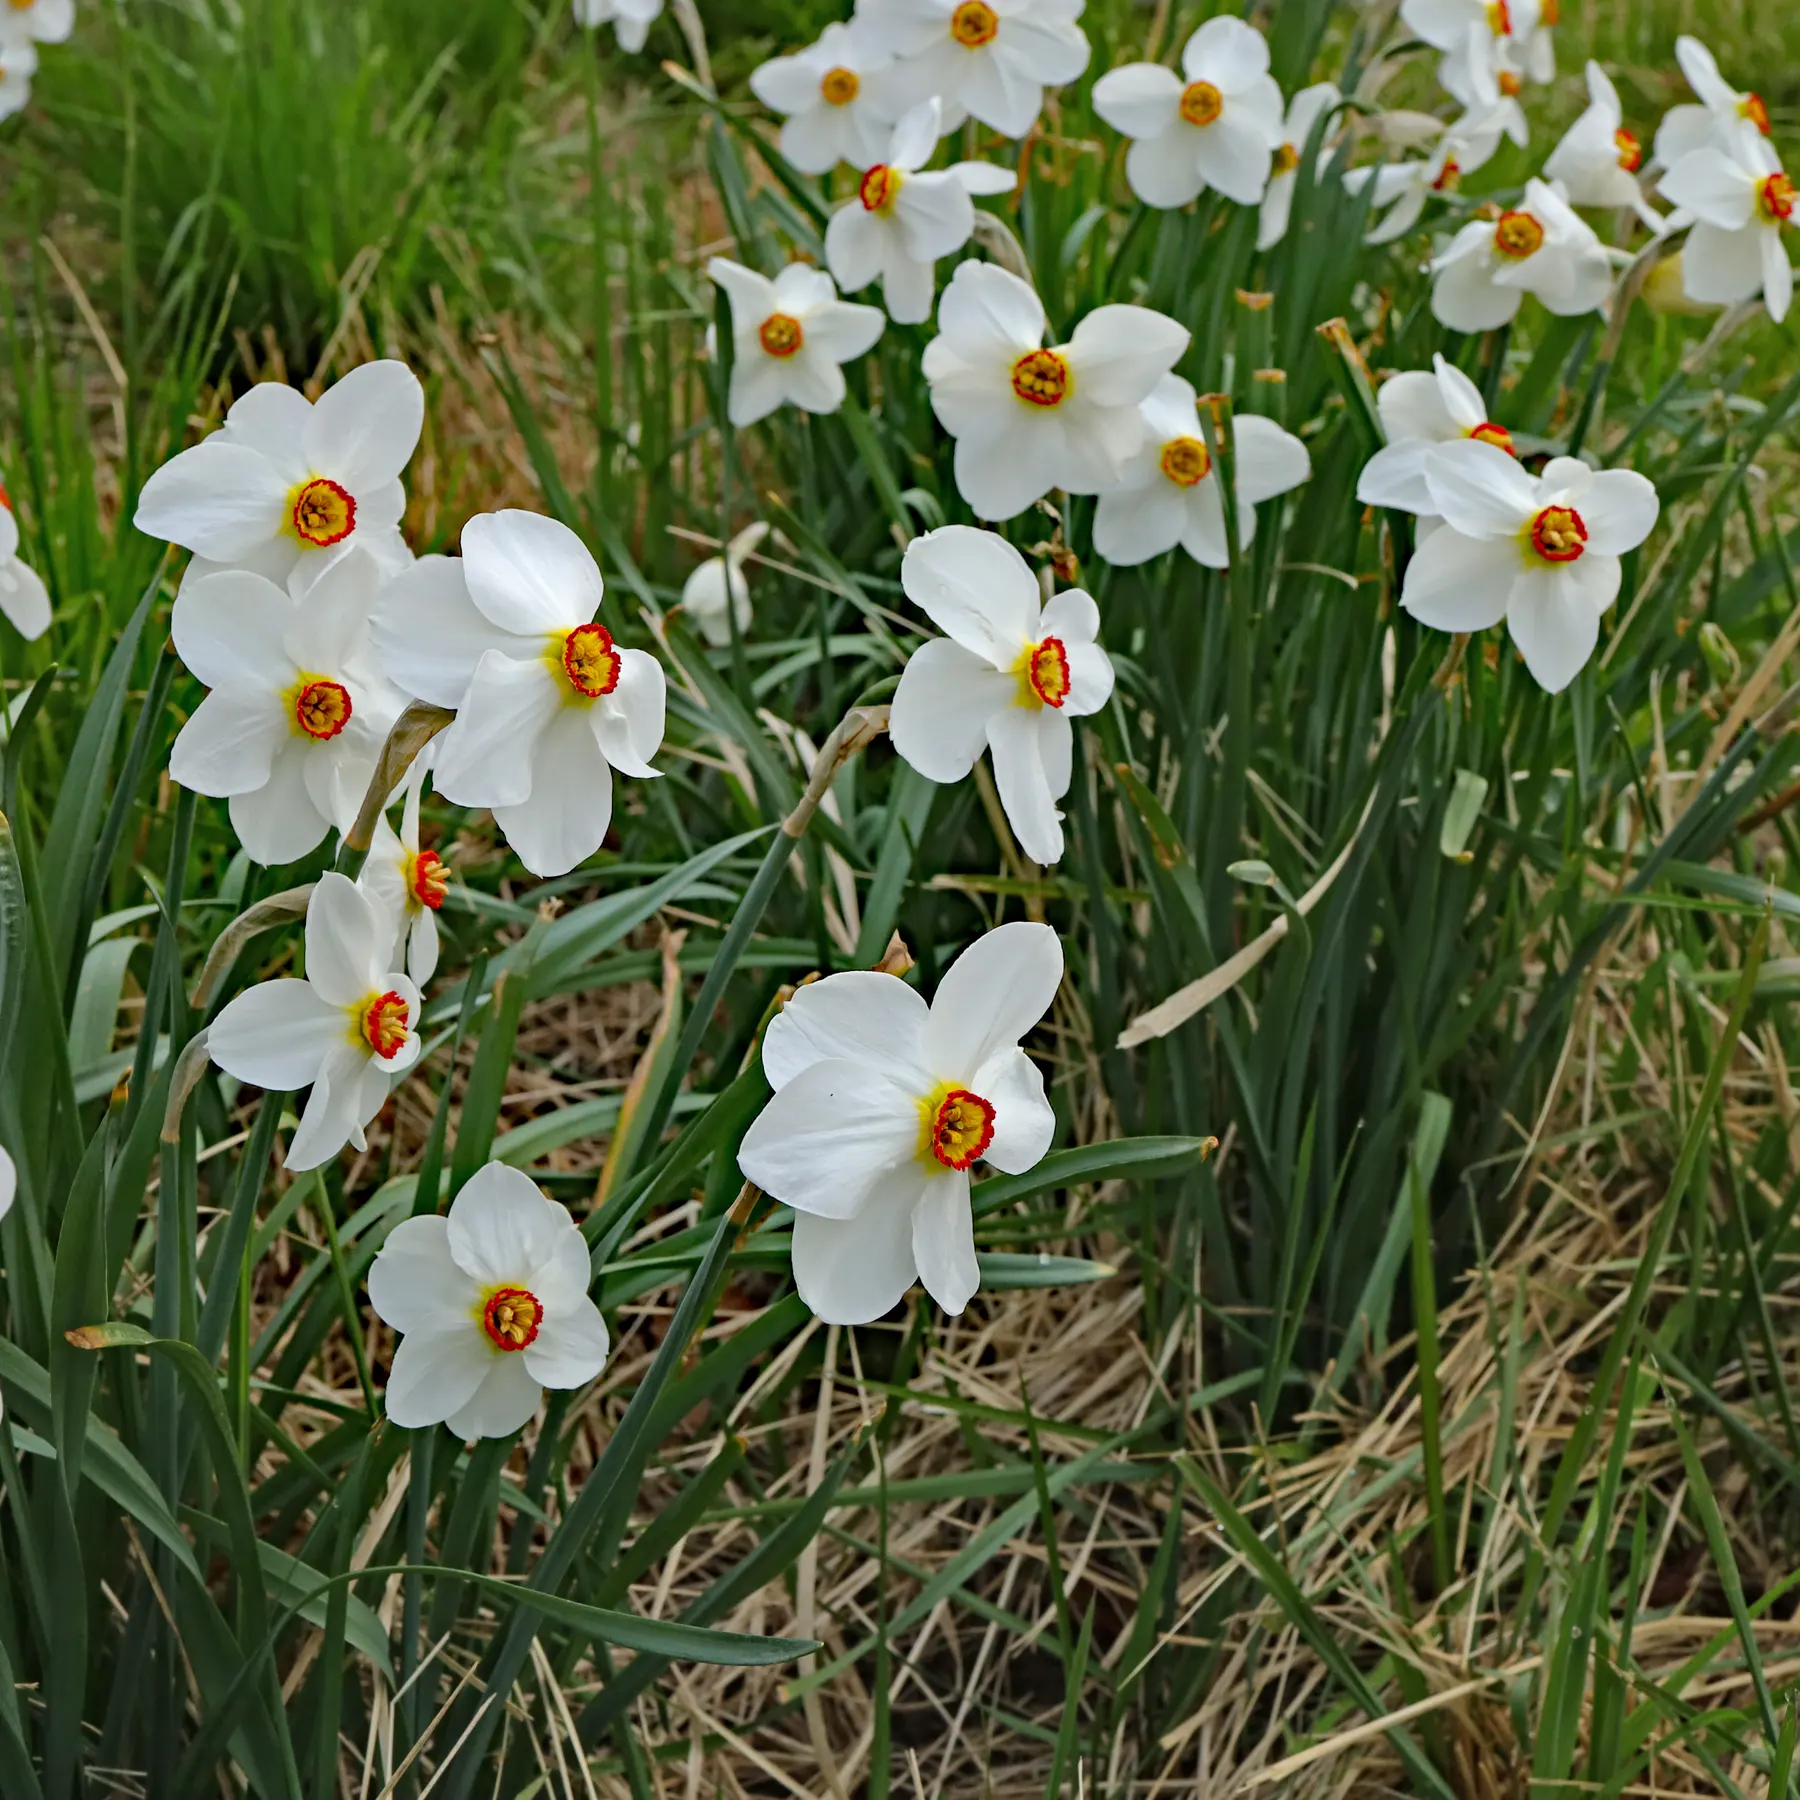 Weiße Narzisse Narcissus poeticus